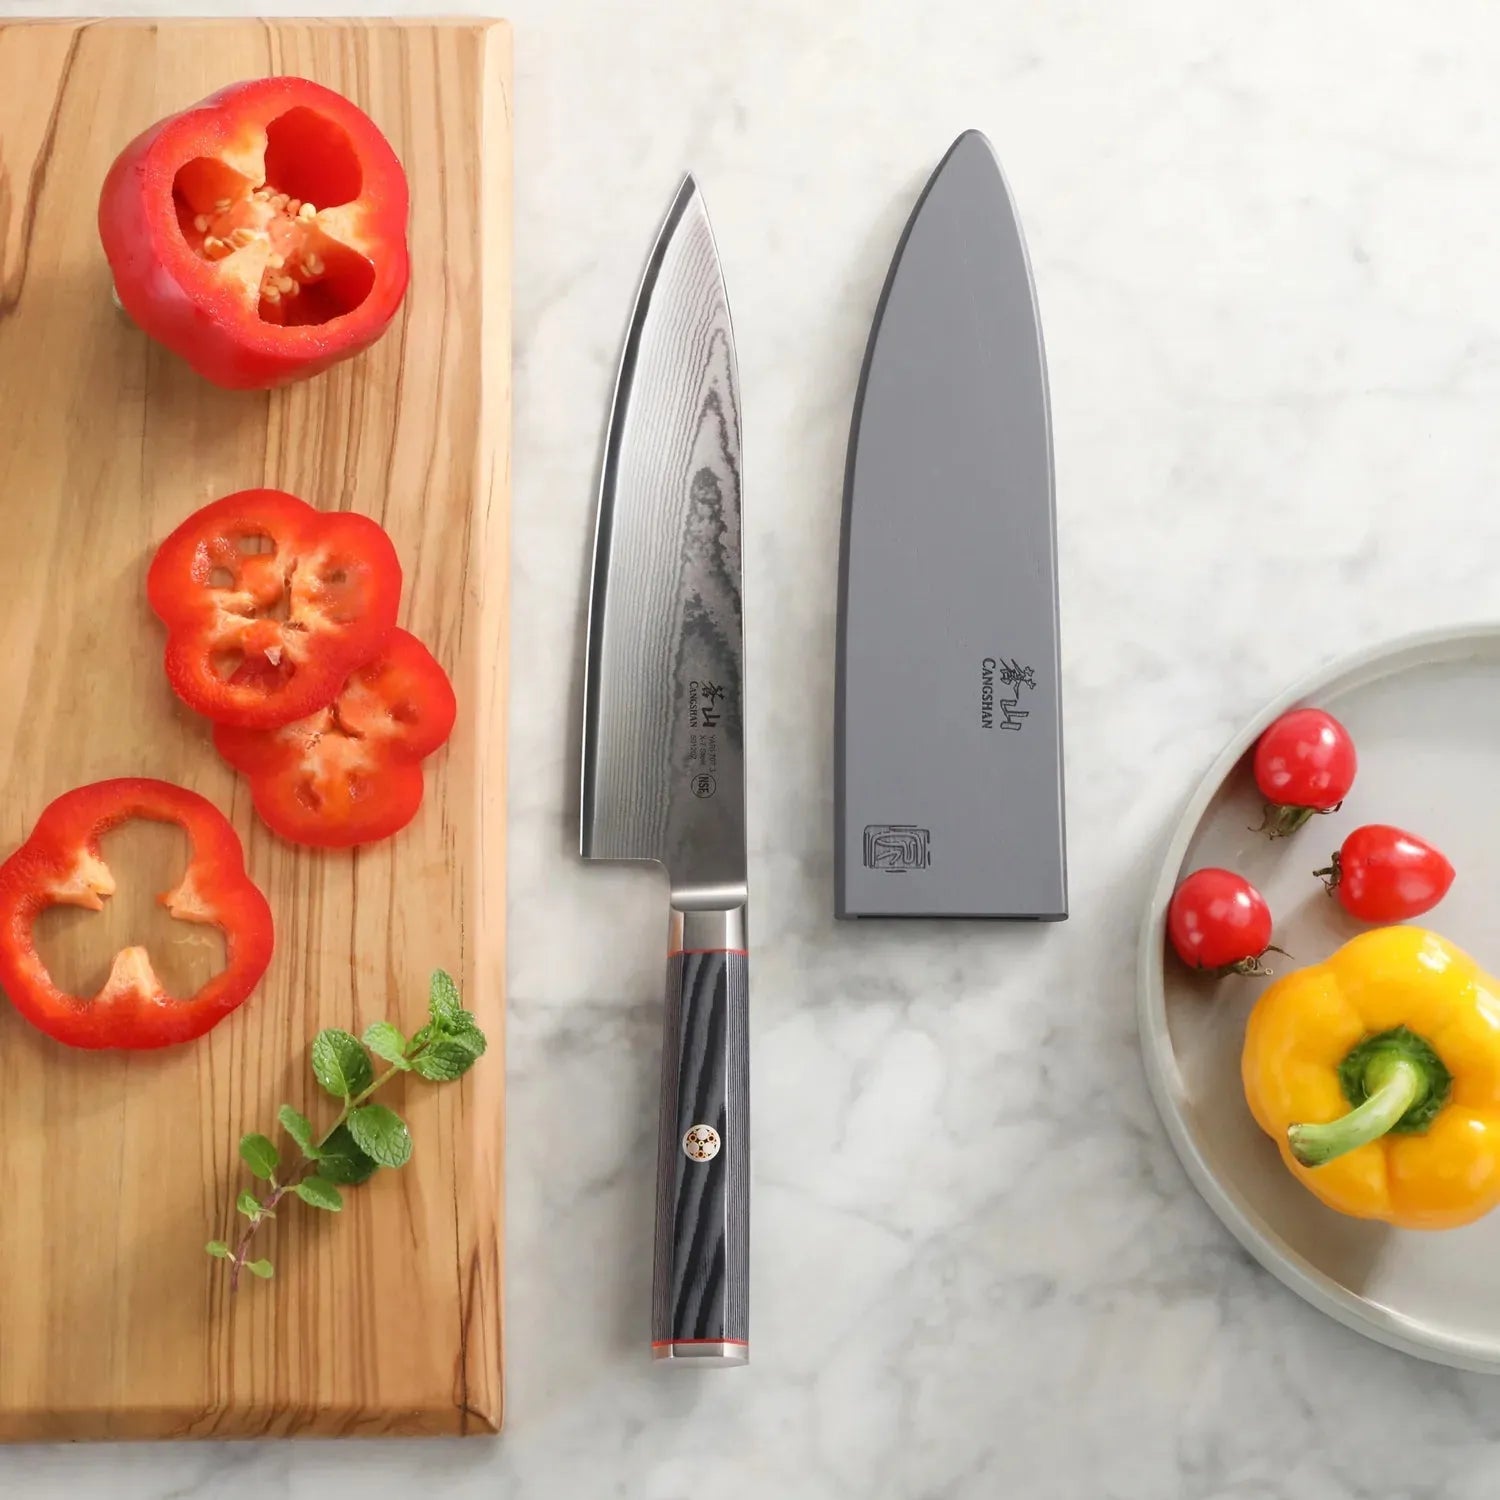 YARI Series 6-inch Chef's Knife with Sheath, X-7 Damascus Steel, 501219